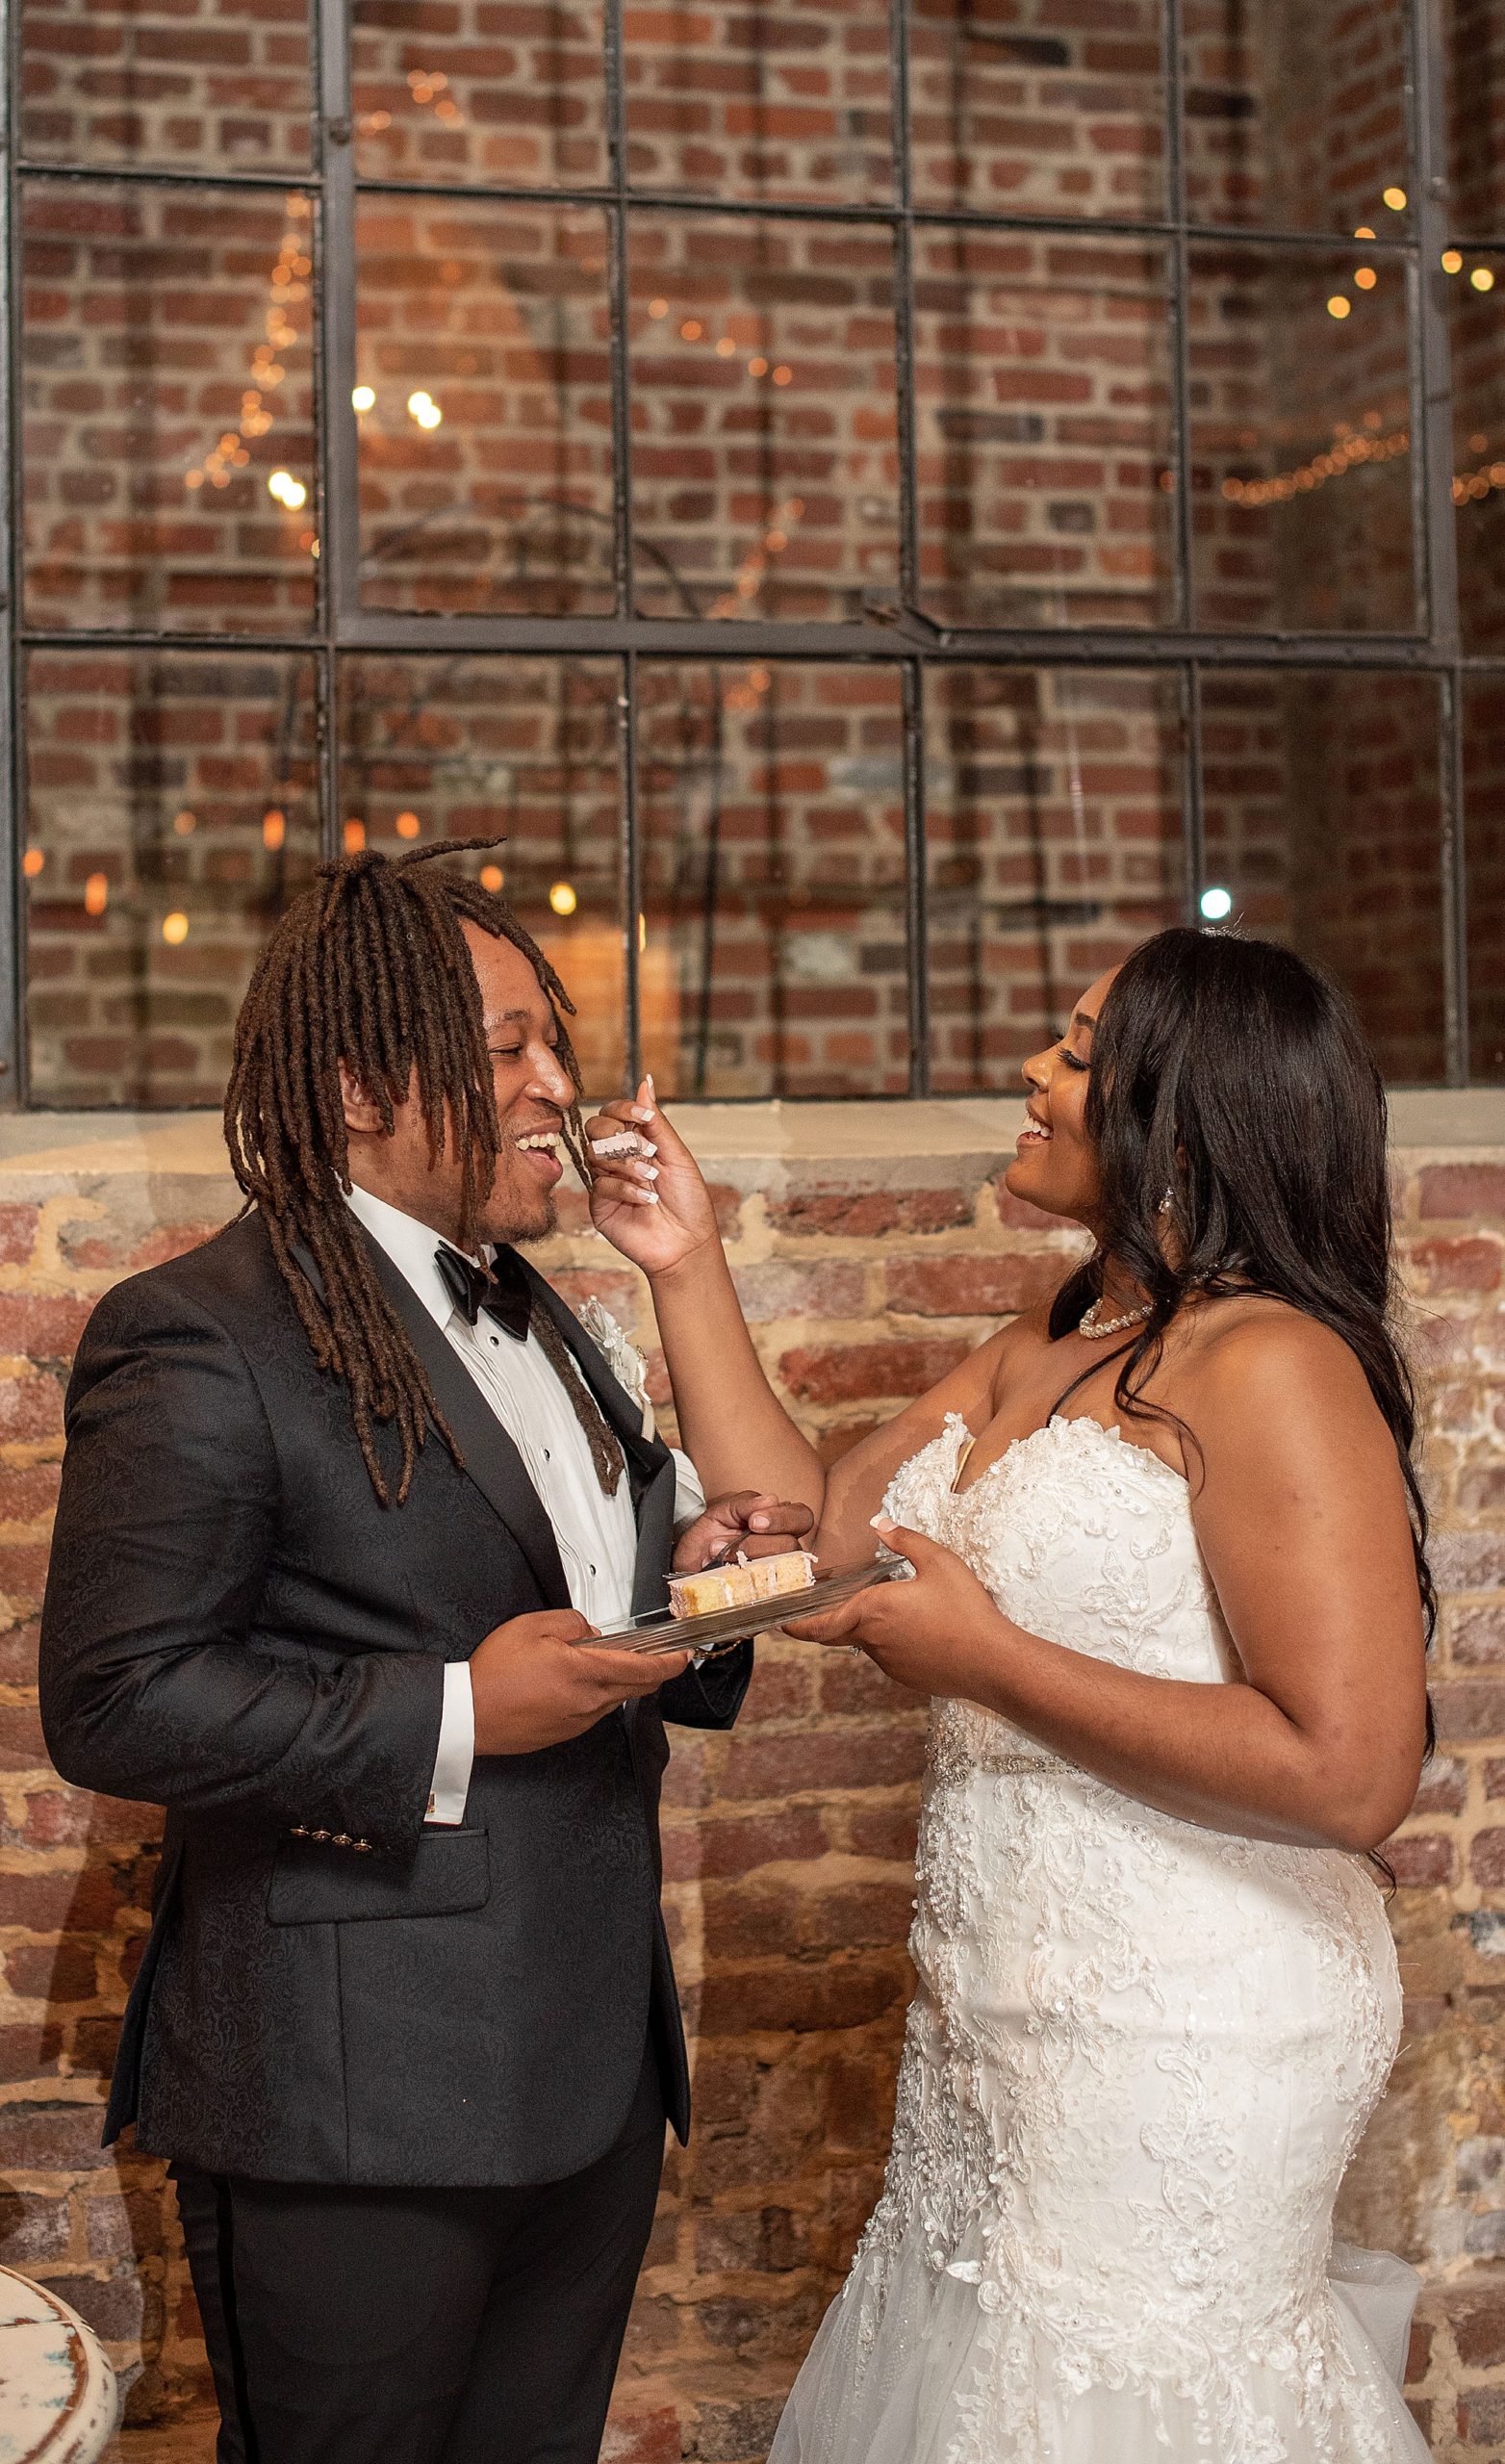 couple eats cake during VA wedding reception